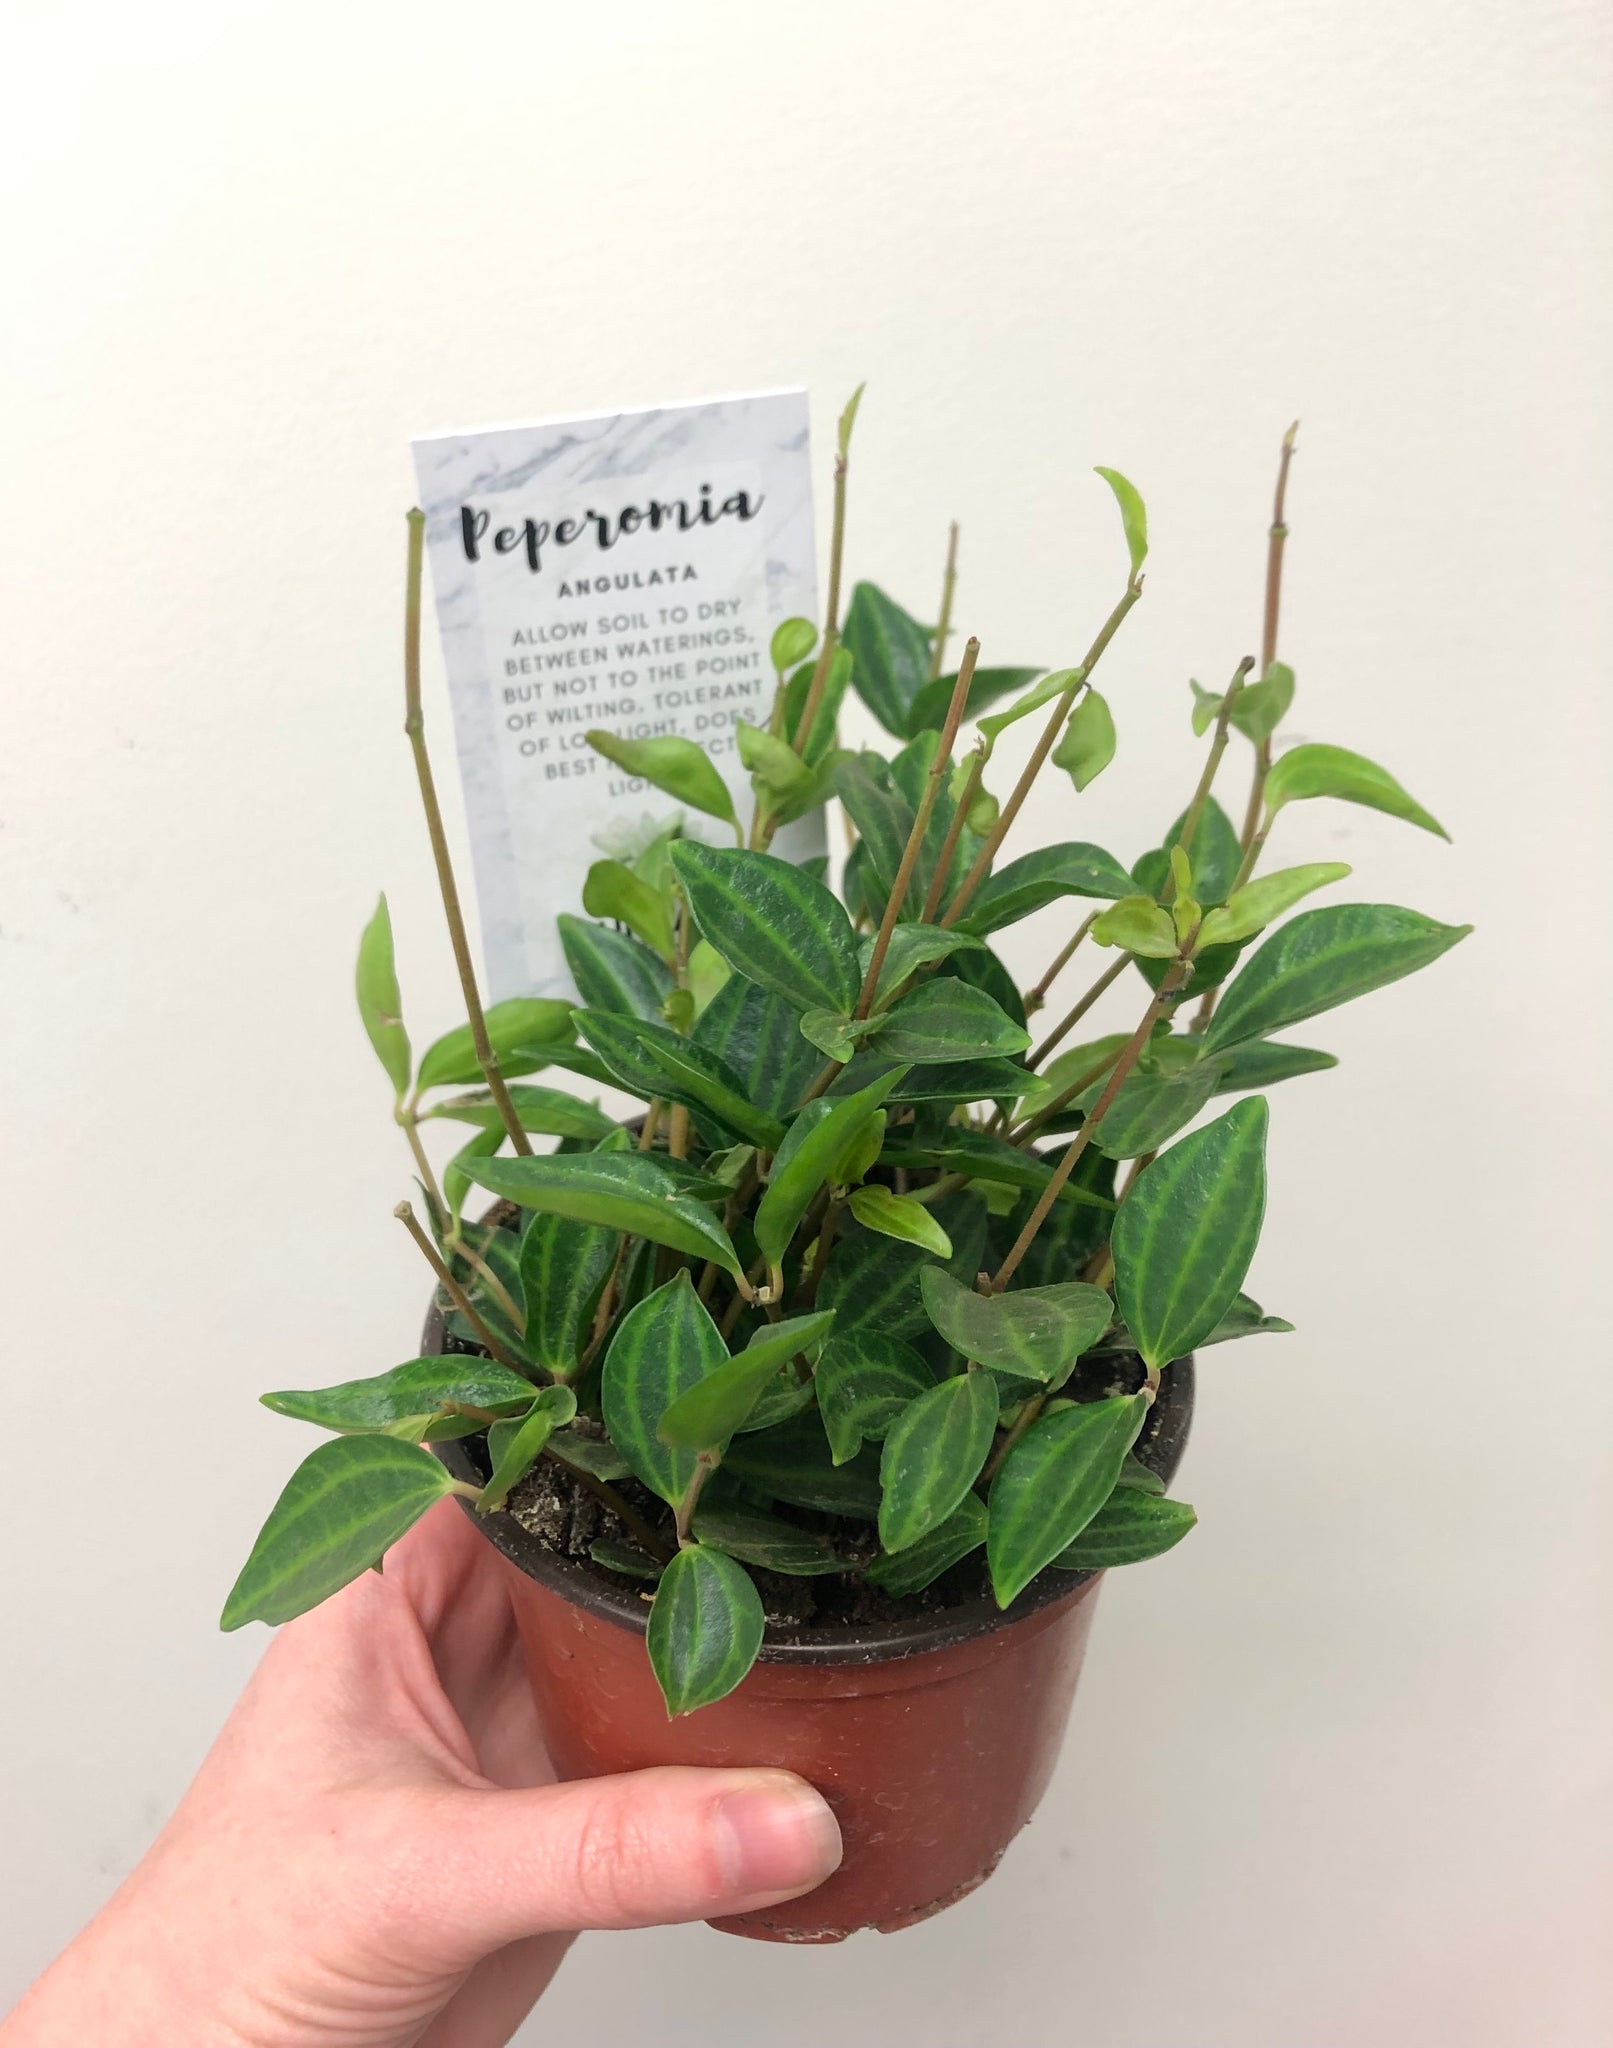 Peperomia angulata